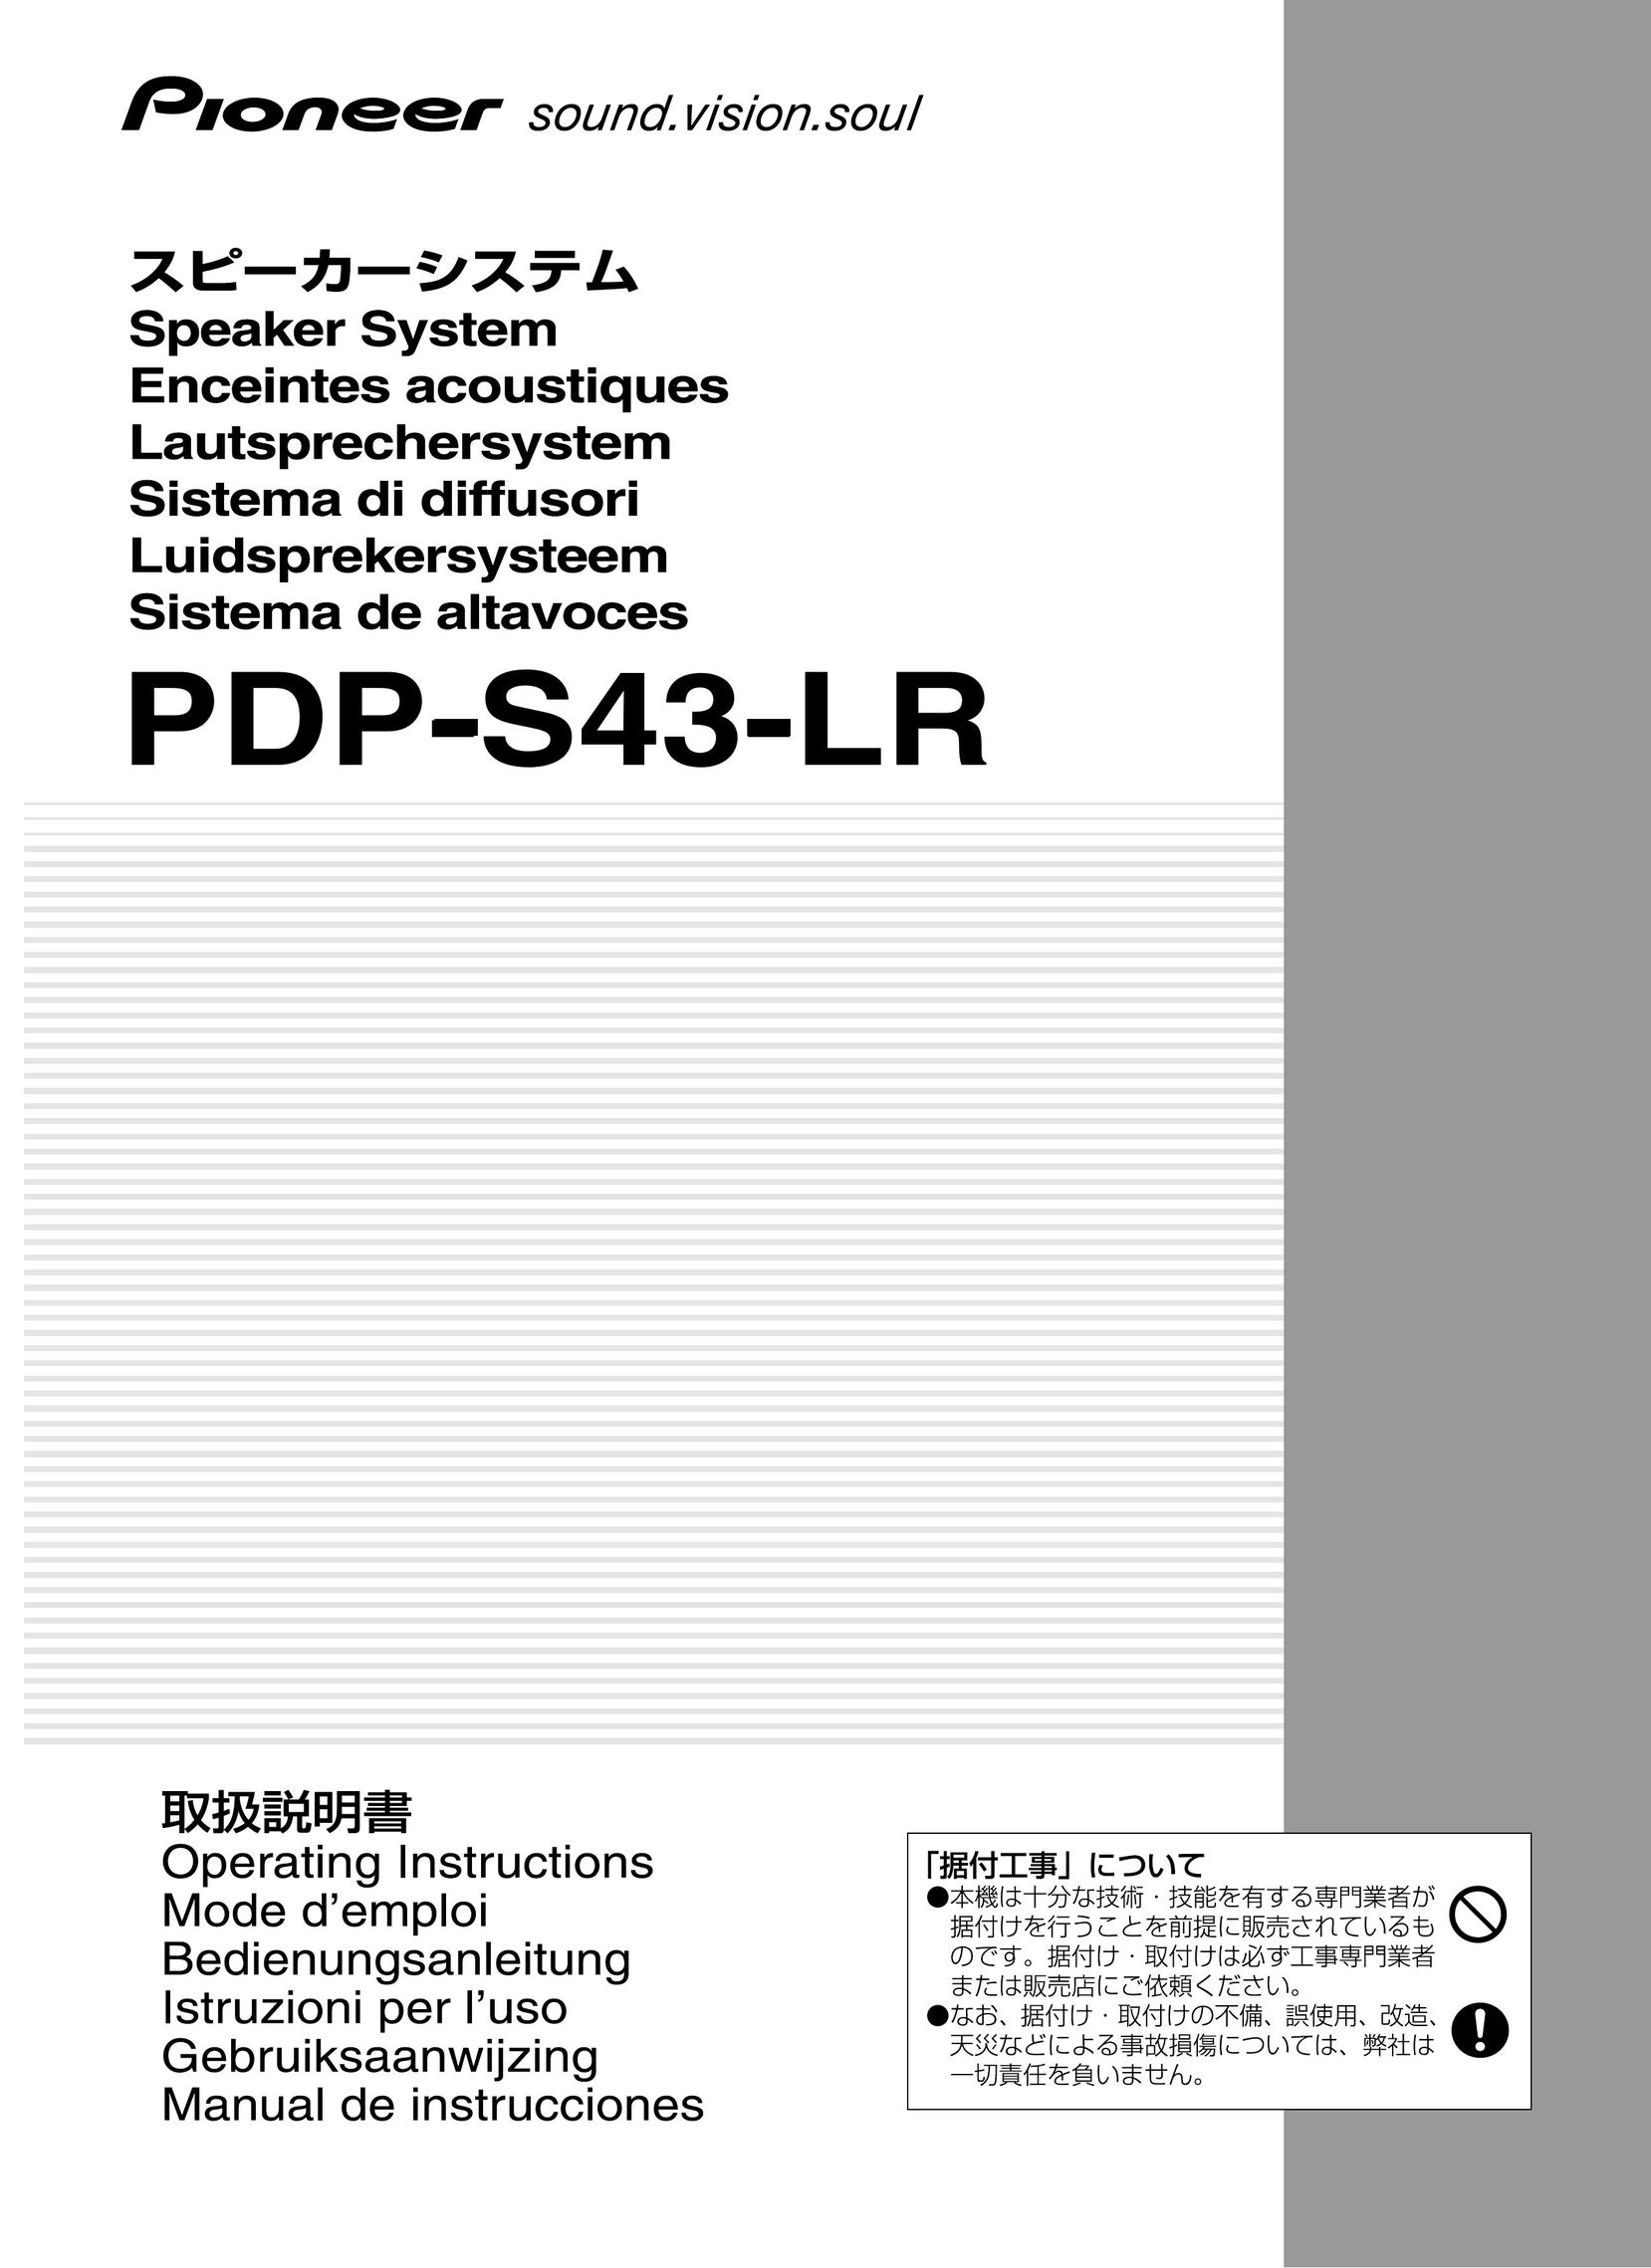 Pioneer PDP-S43-LR Speaker System User Manual